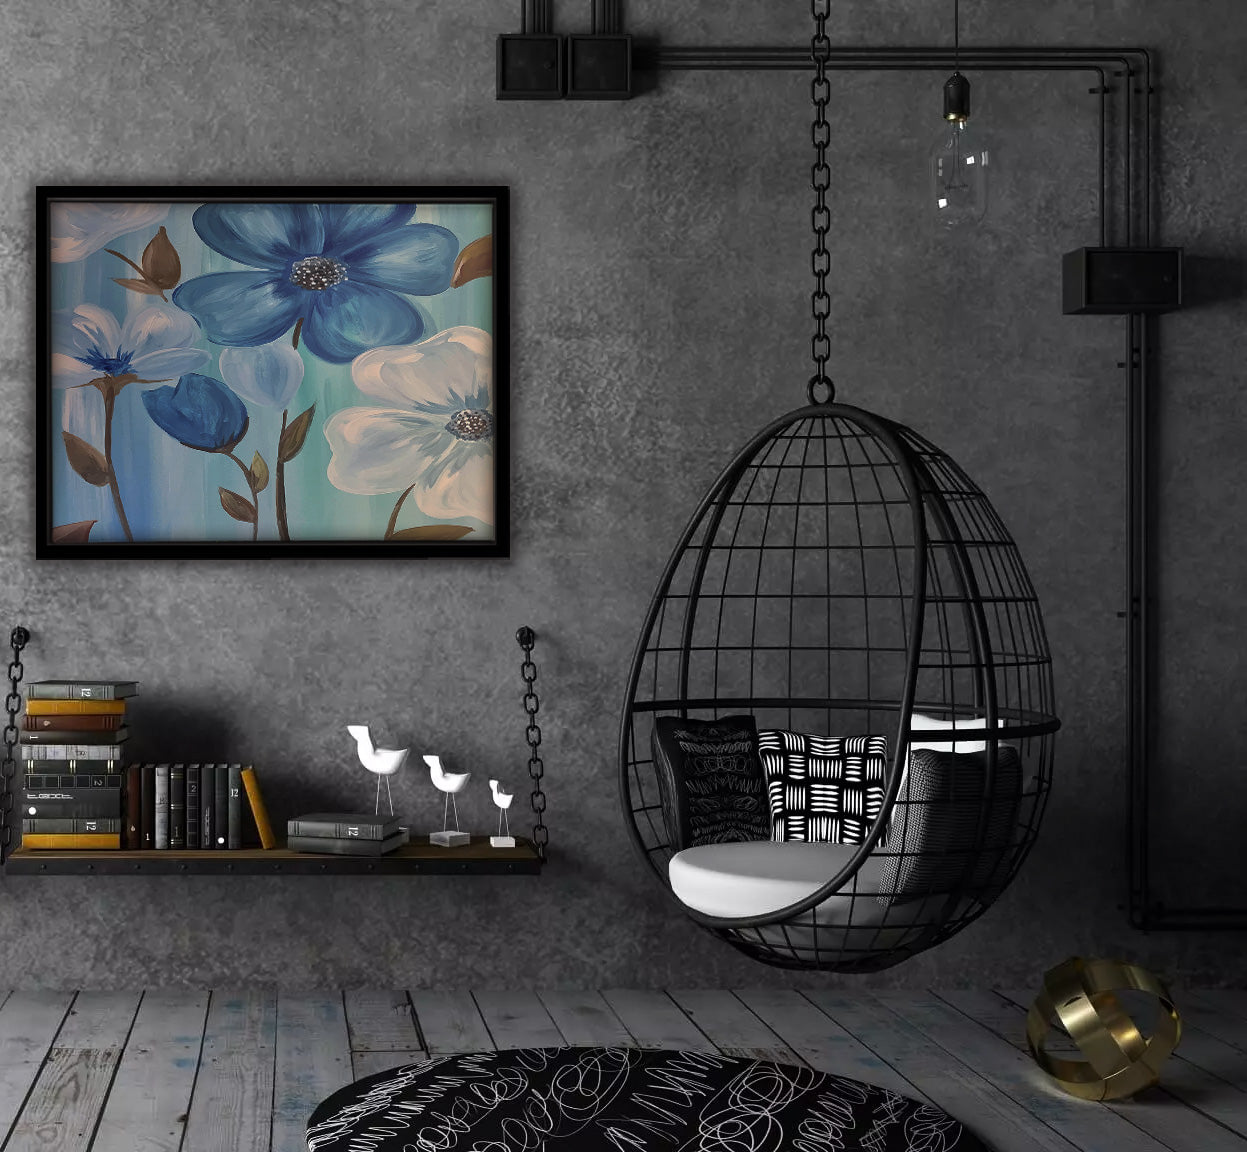 Blue Flowers Framed Canvas